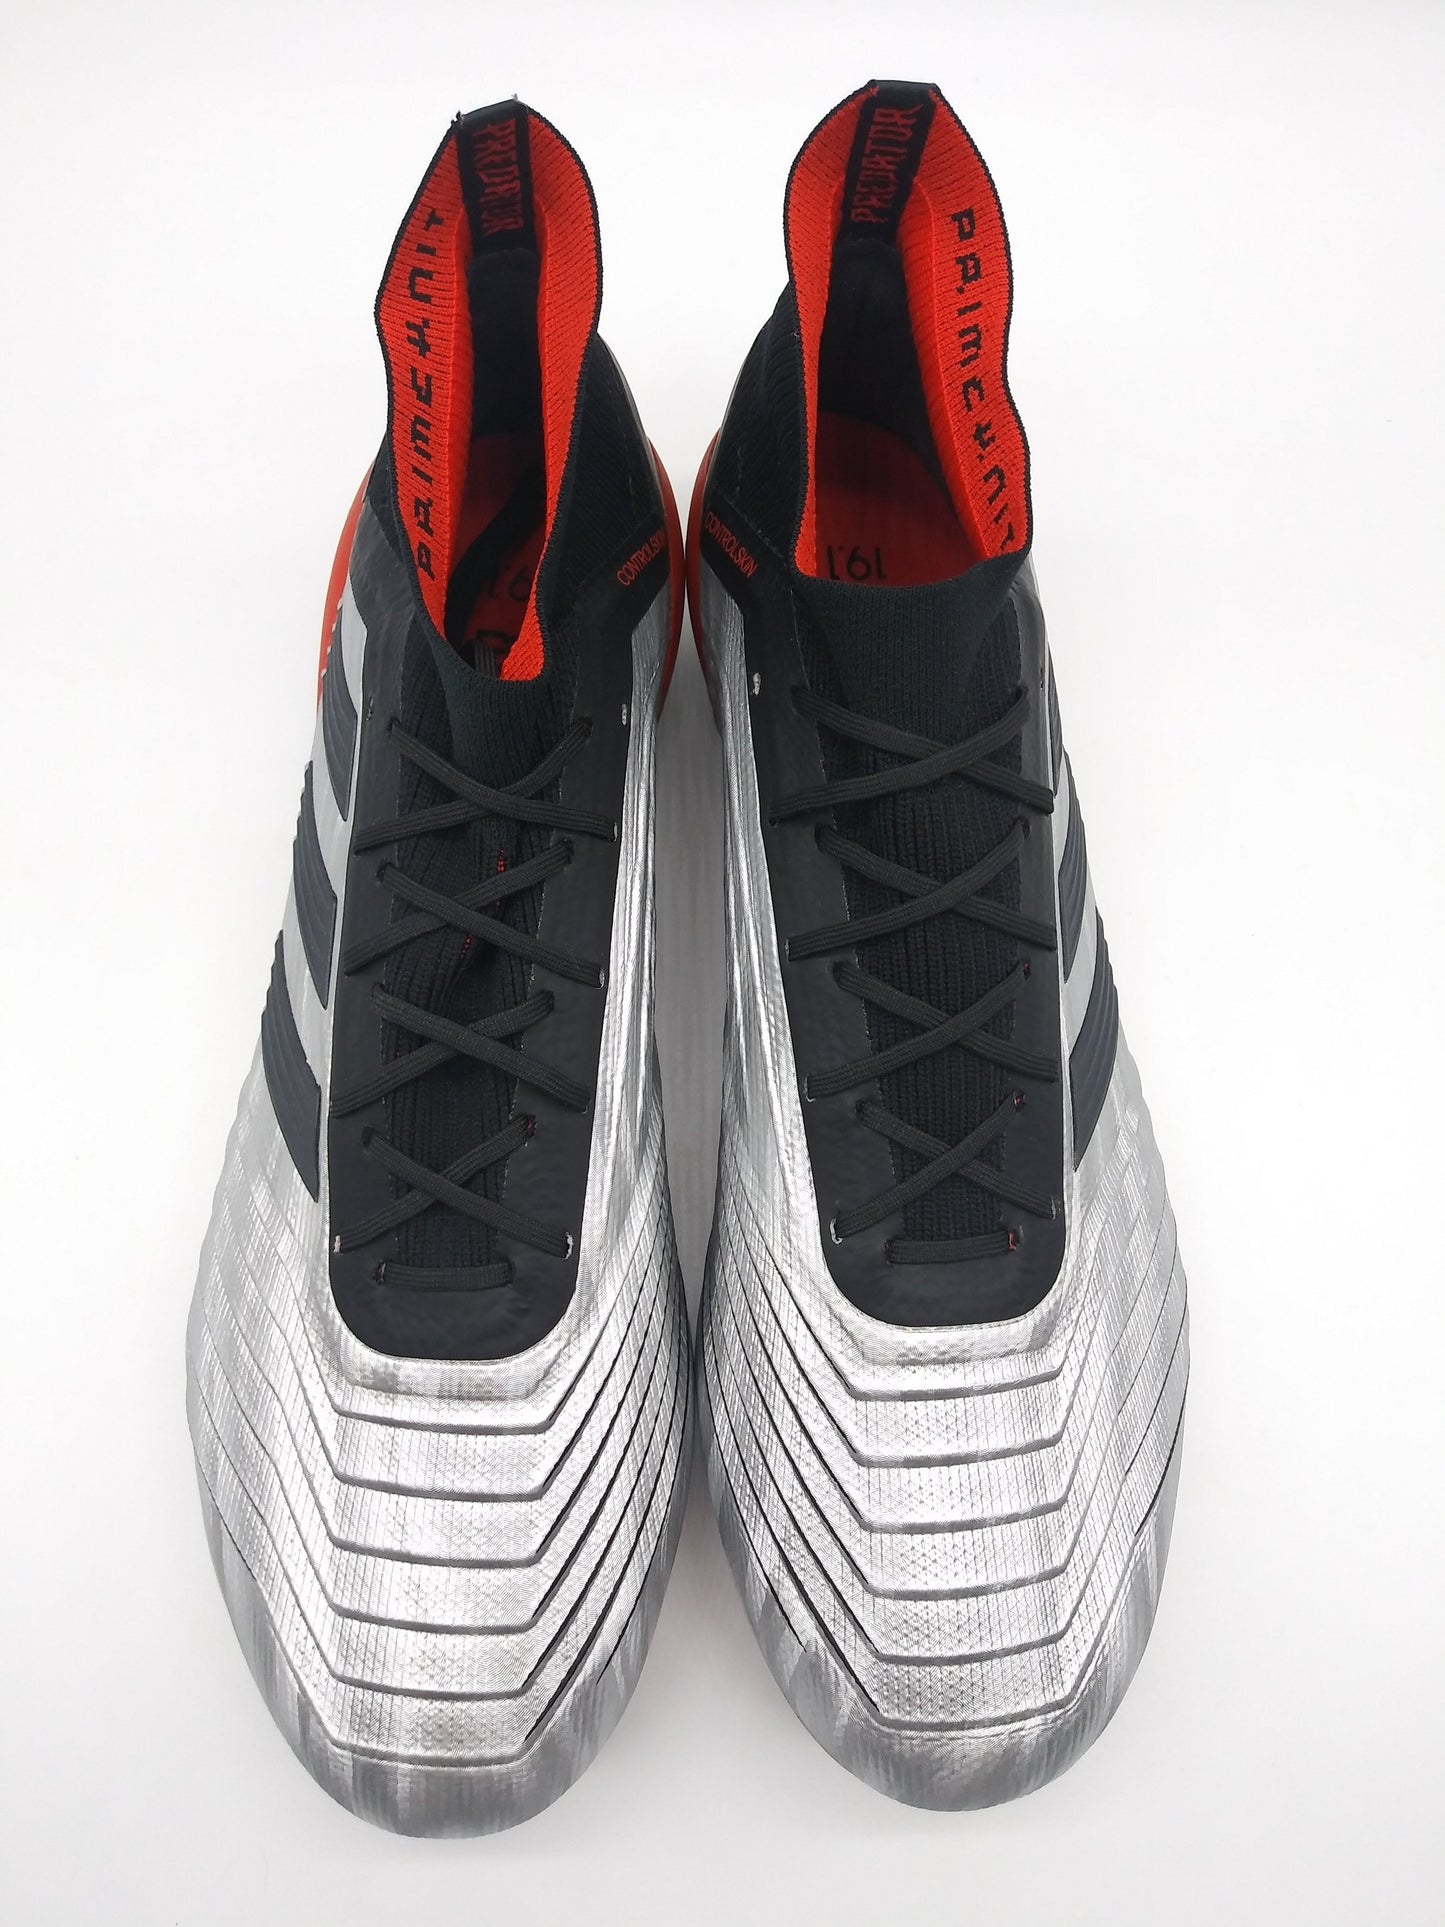 Adidas Predator 19.1 FG Silver Black Red